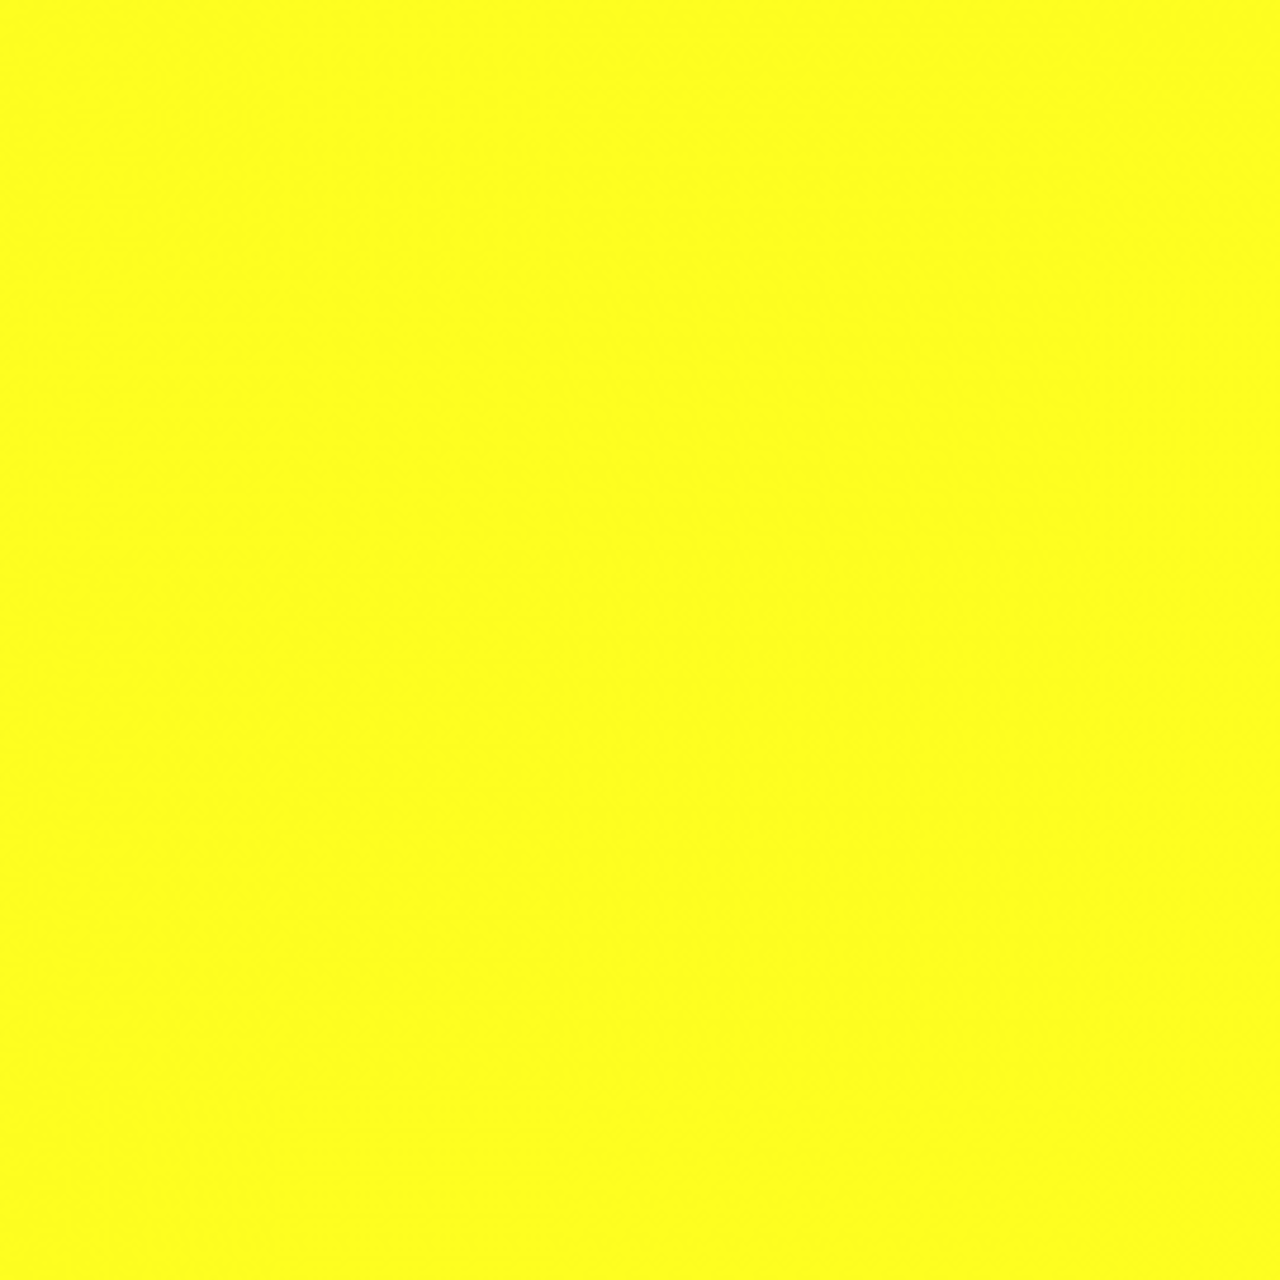 Oracal 651 - 025 Brimstone Yellow